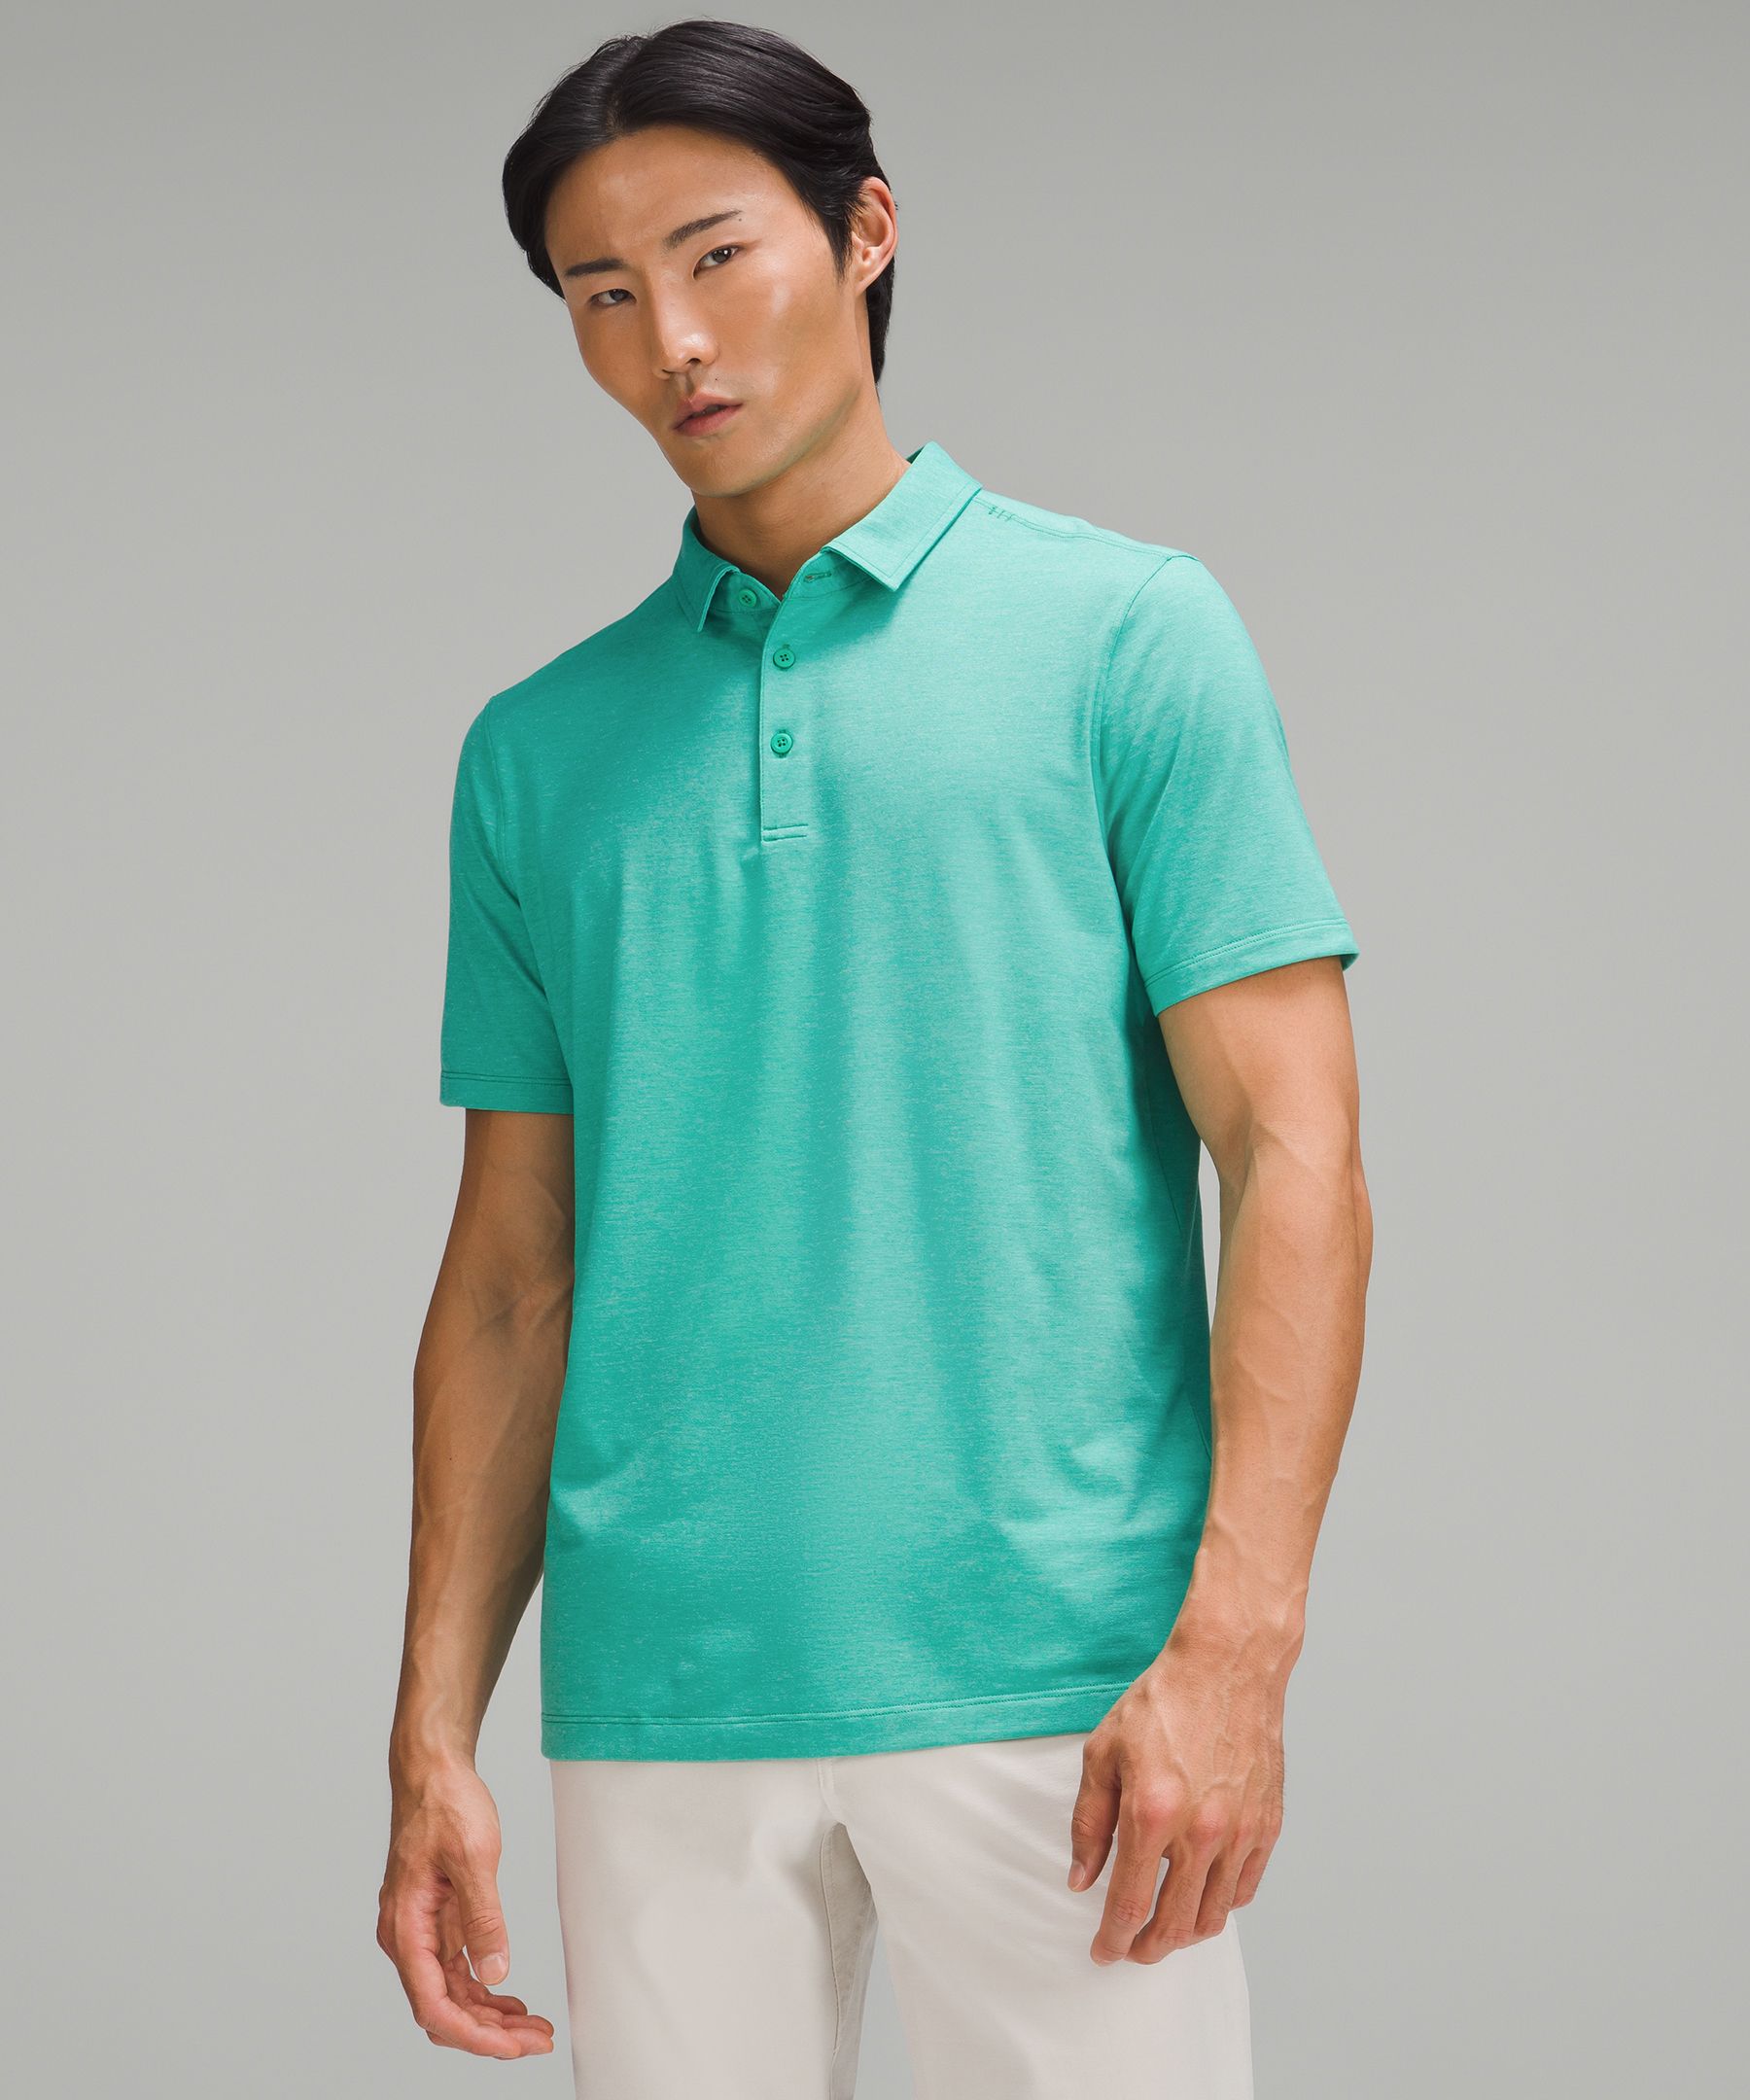 Lululemon Evolution Short-Sleeve Polo Shirt - 146959200